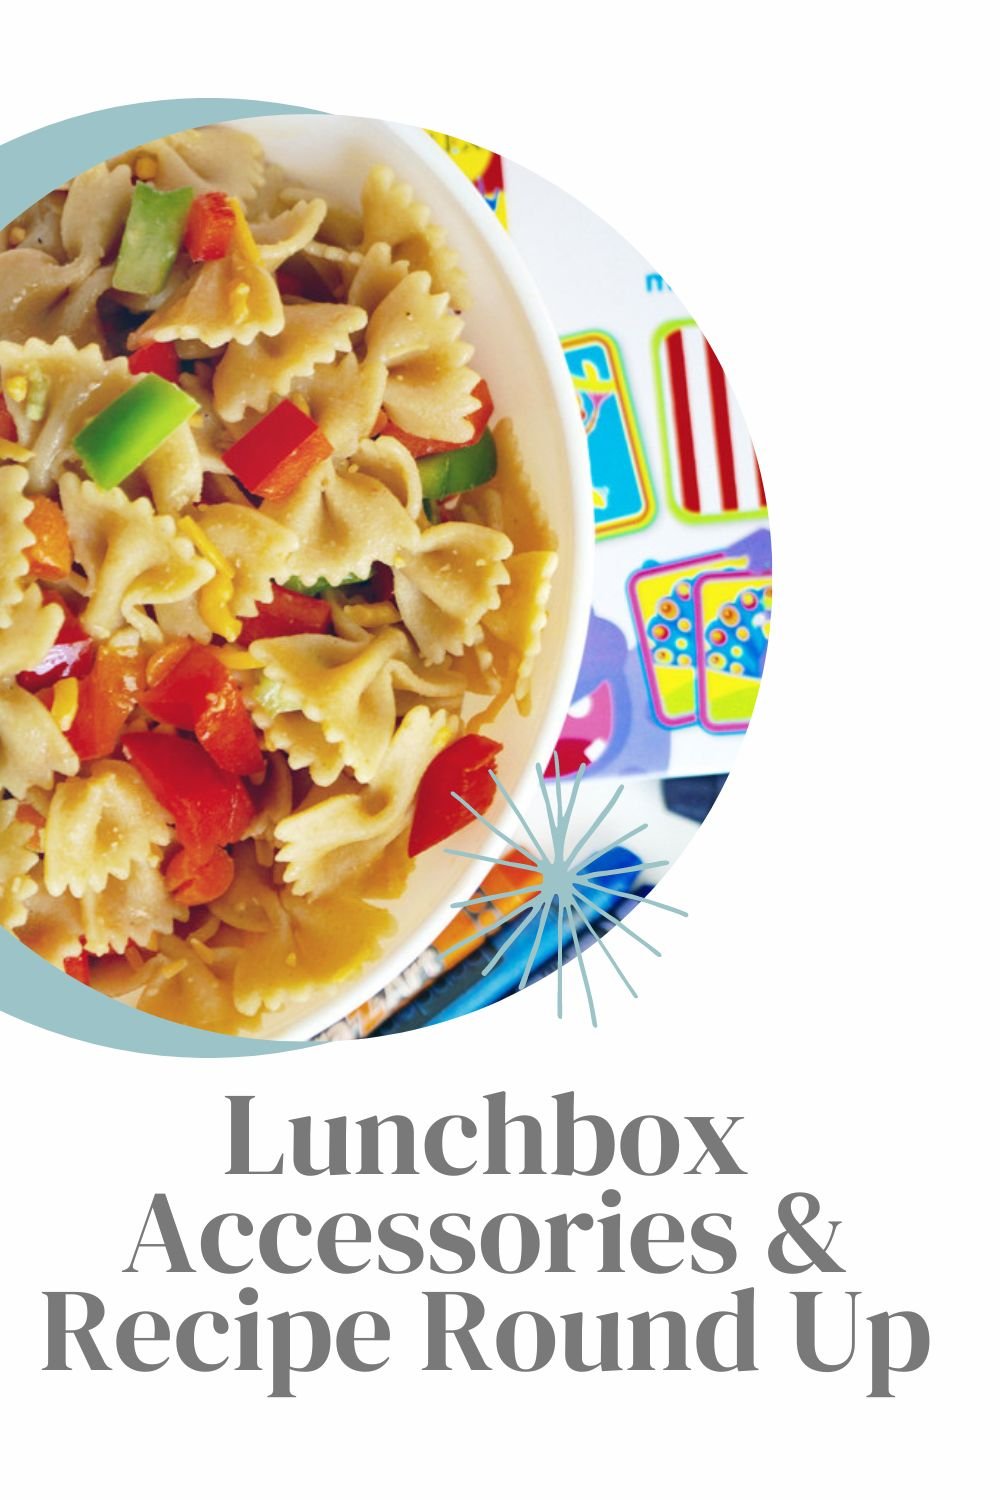 Back to School Lunch Edit - Dish It Girl Recipe Box